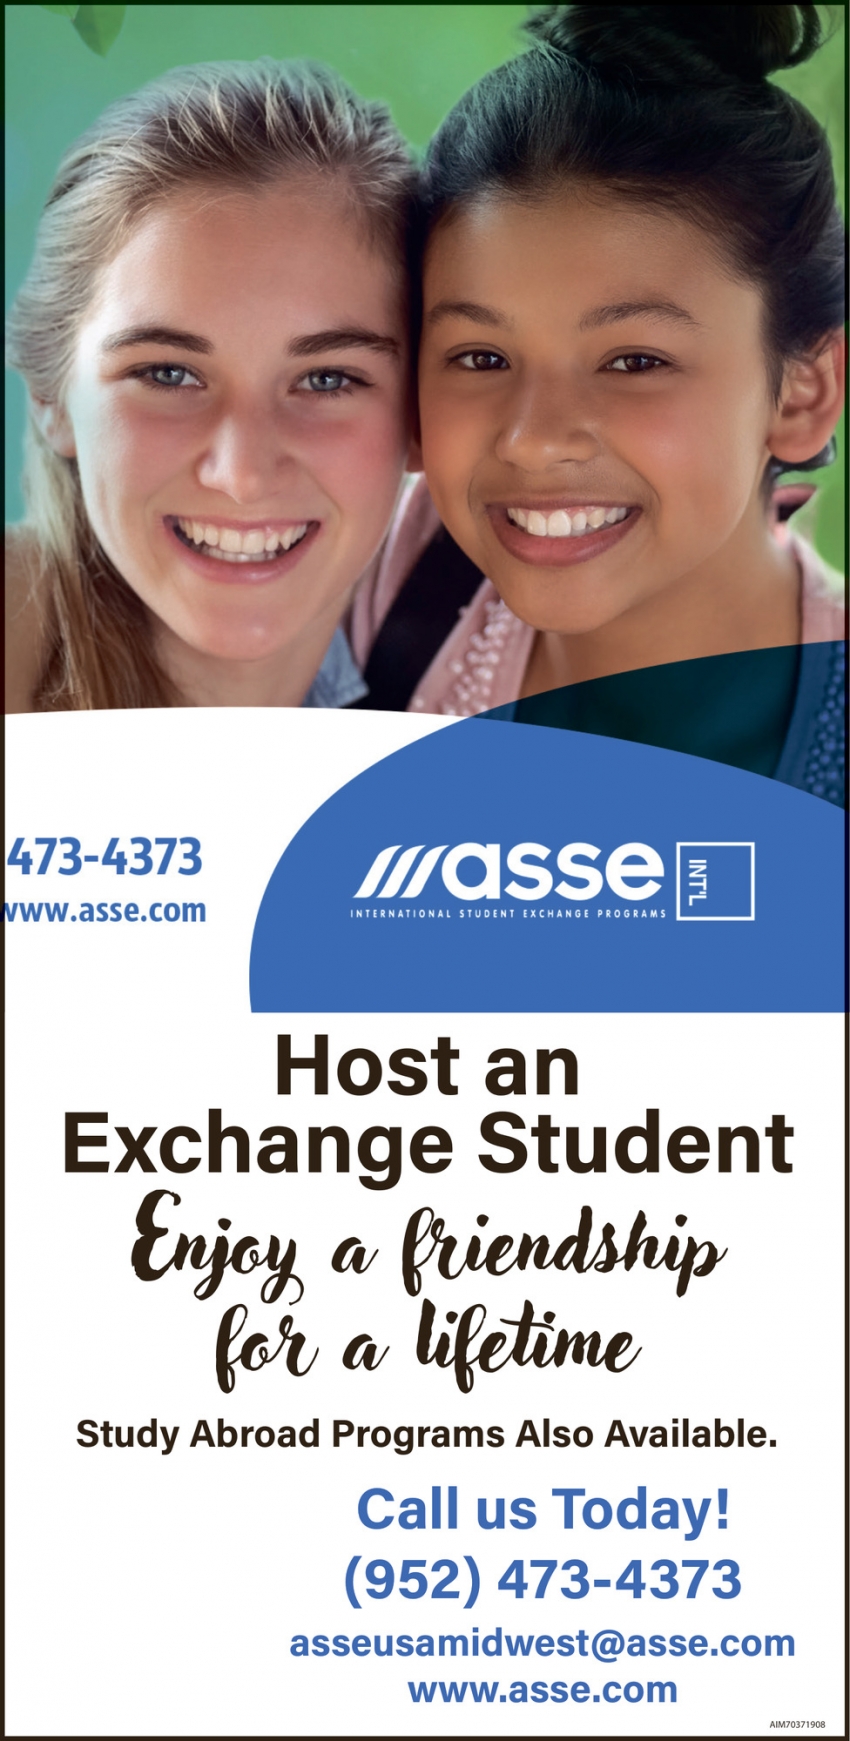 Asse International Students Exchange Programs